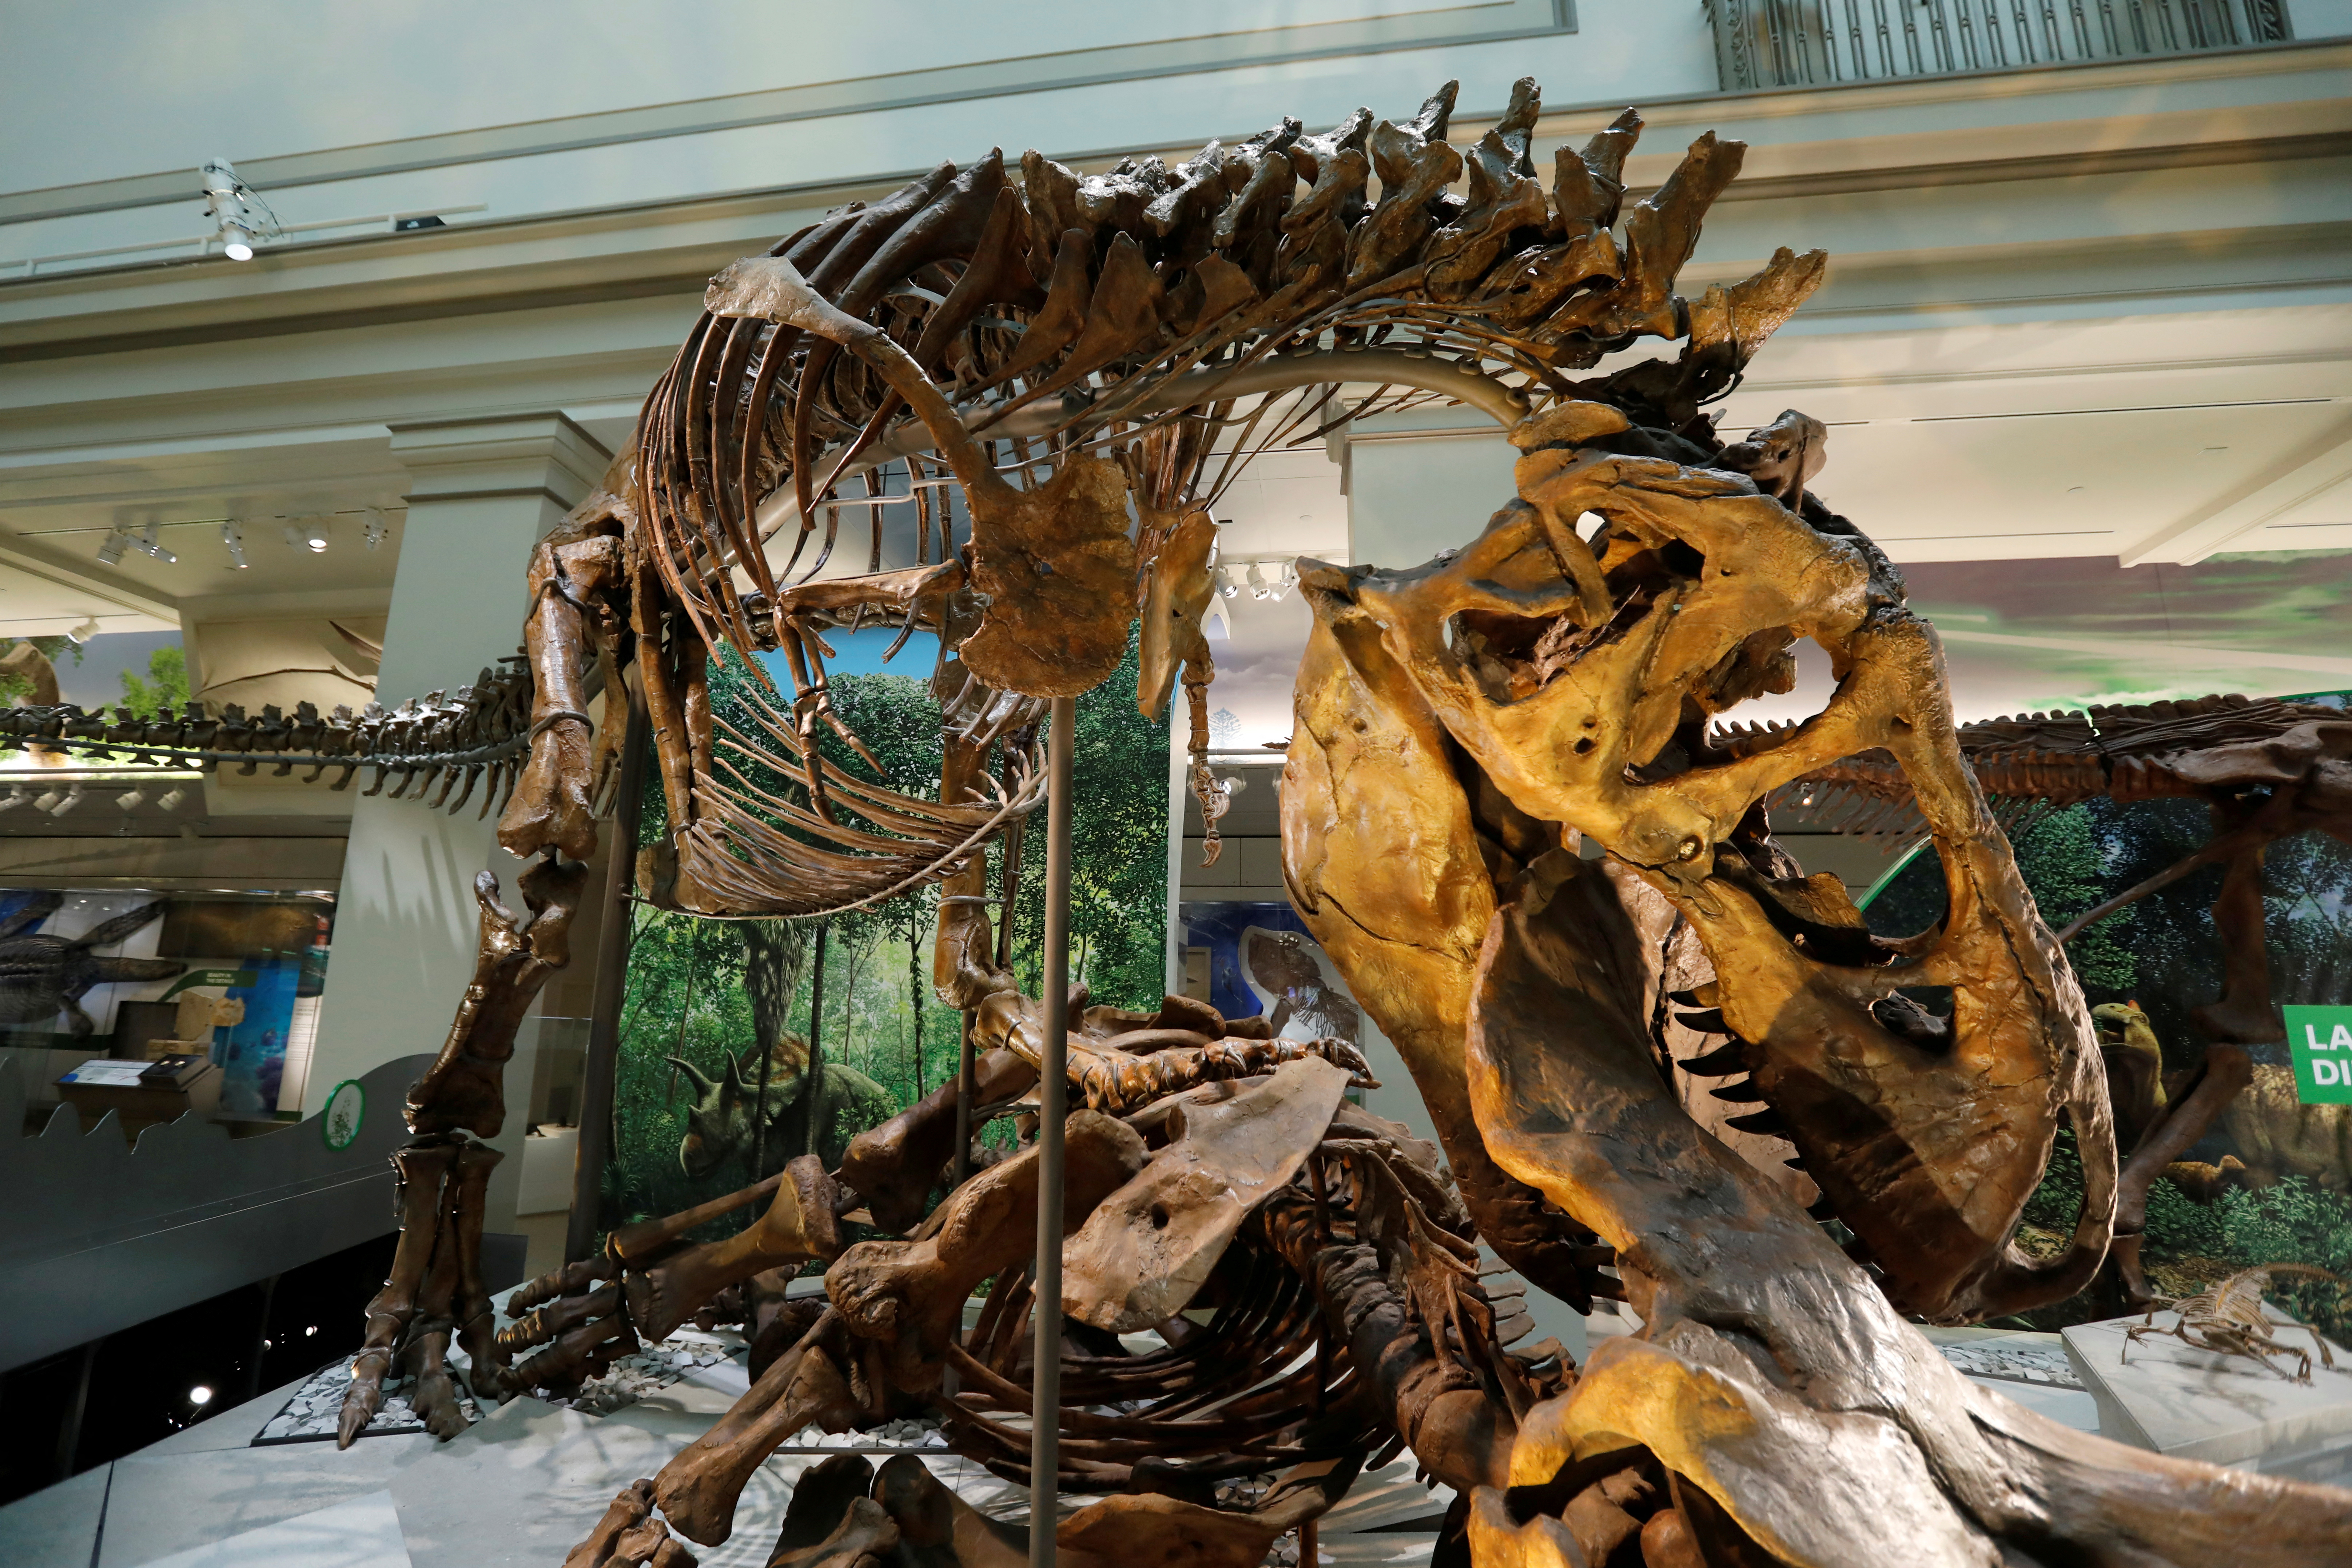 Tyrannosaurus rex should be split into three species